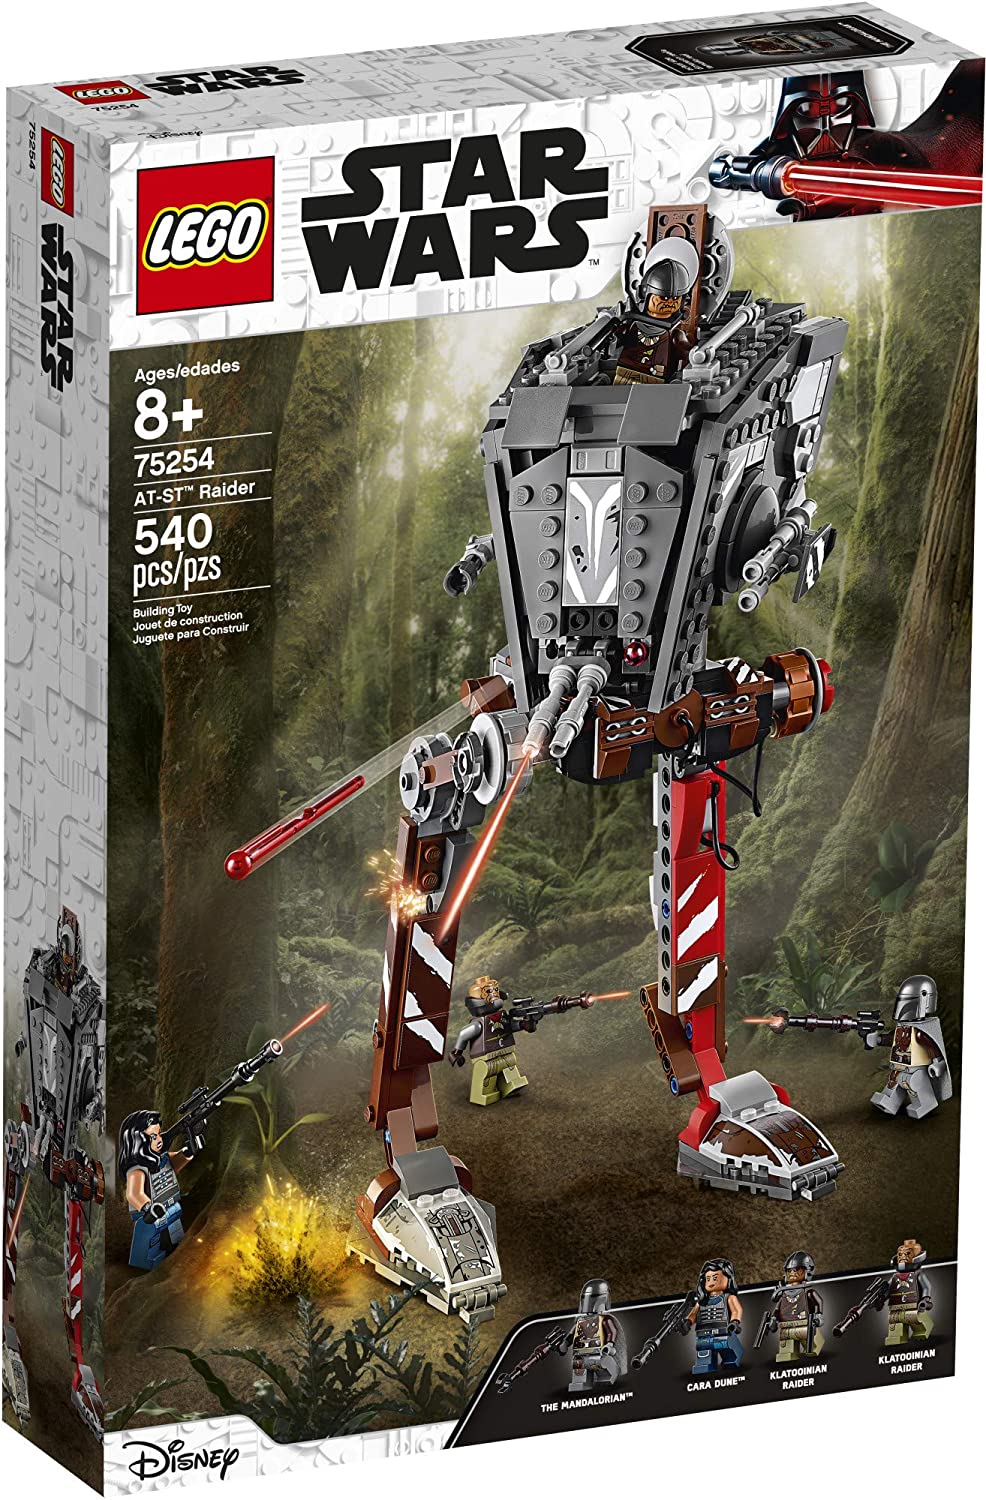 LEGO Star Wars AT-ST Raider 75254 Building Set (540 Pieces)